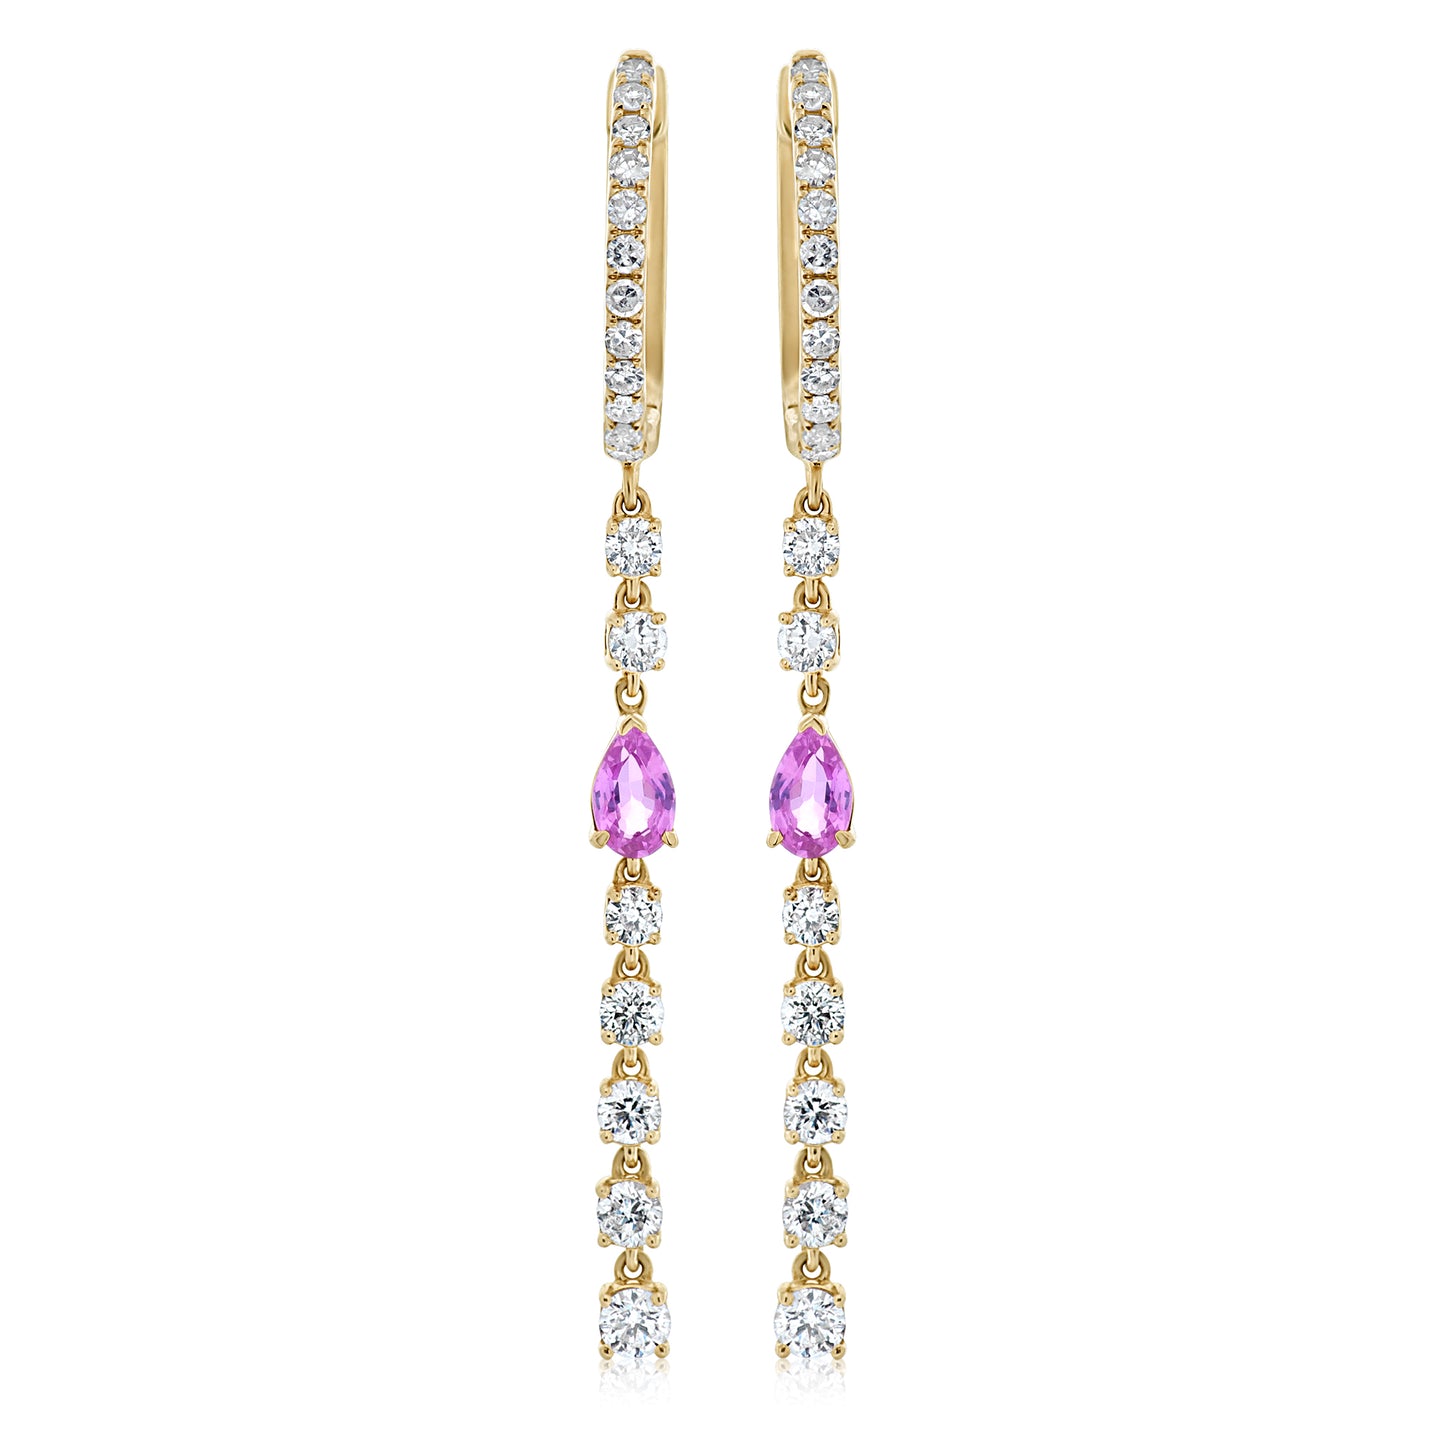 Diamond and Pink Sapphire Strand Earrings